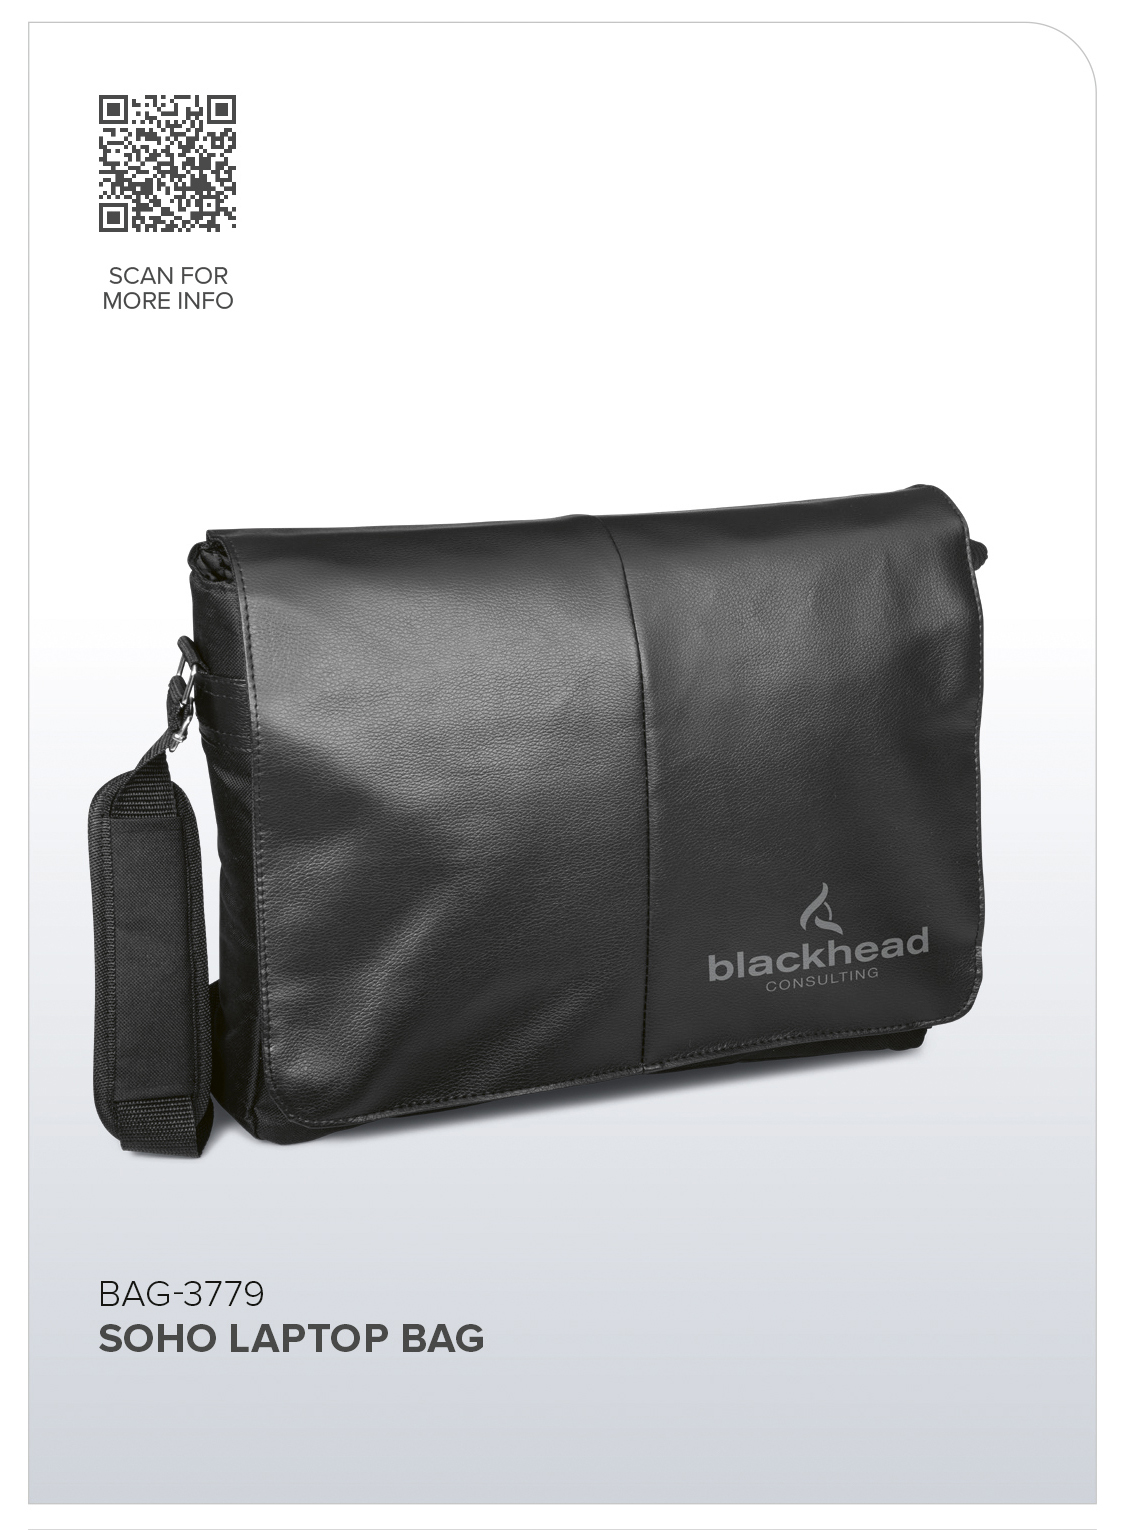 BAG-3779 - Soho Laptop Bag - Catalogue Image